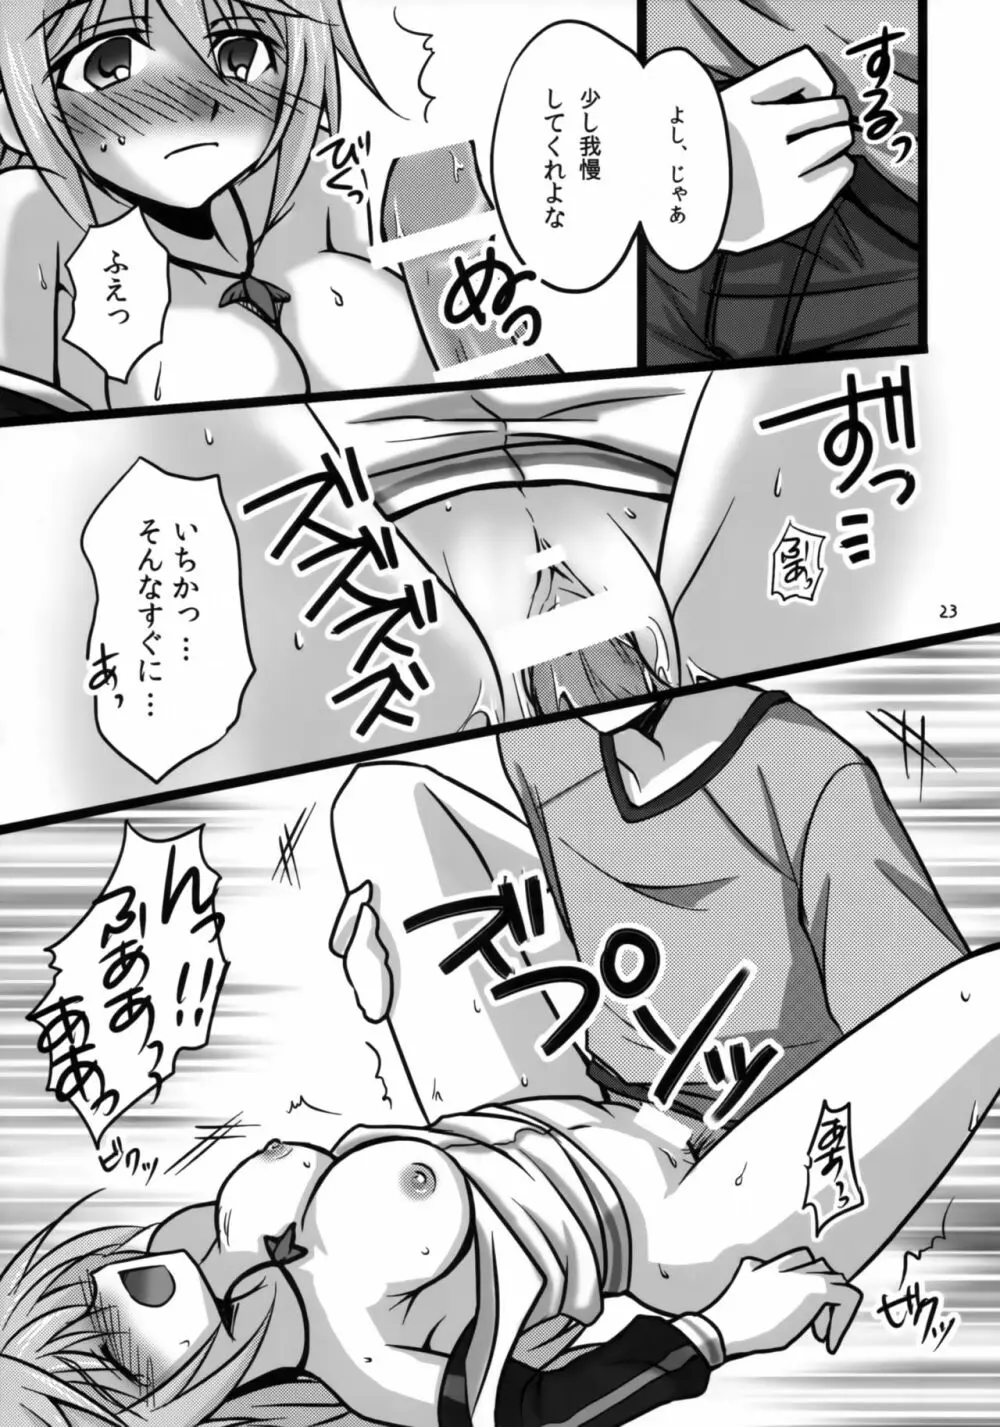 IchikaとSexしたい - page22